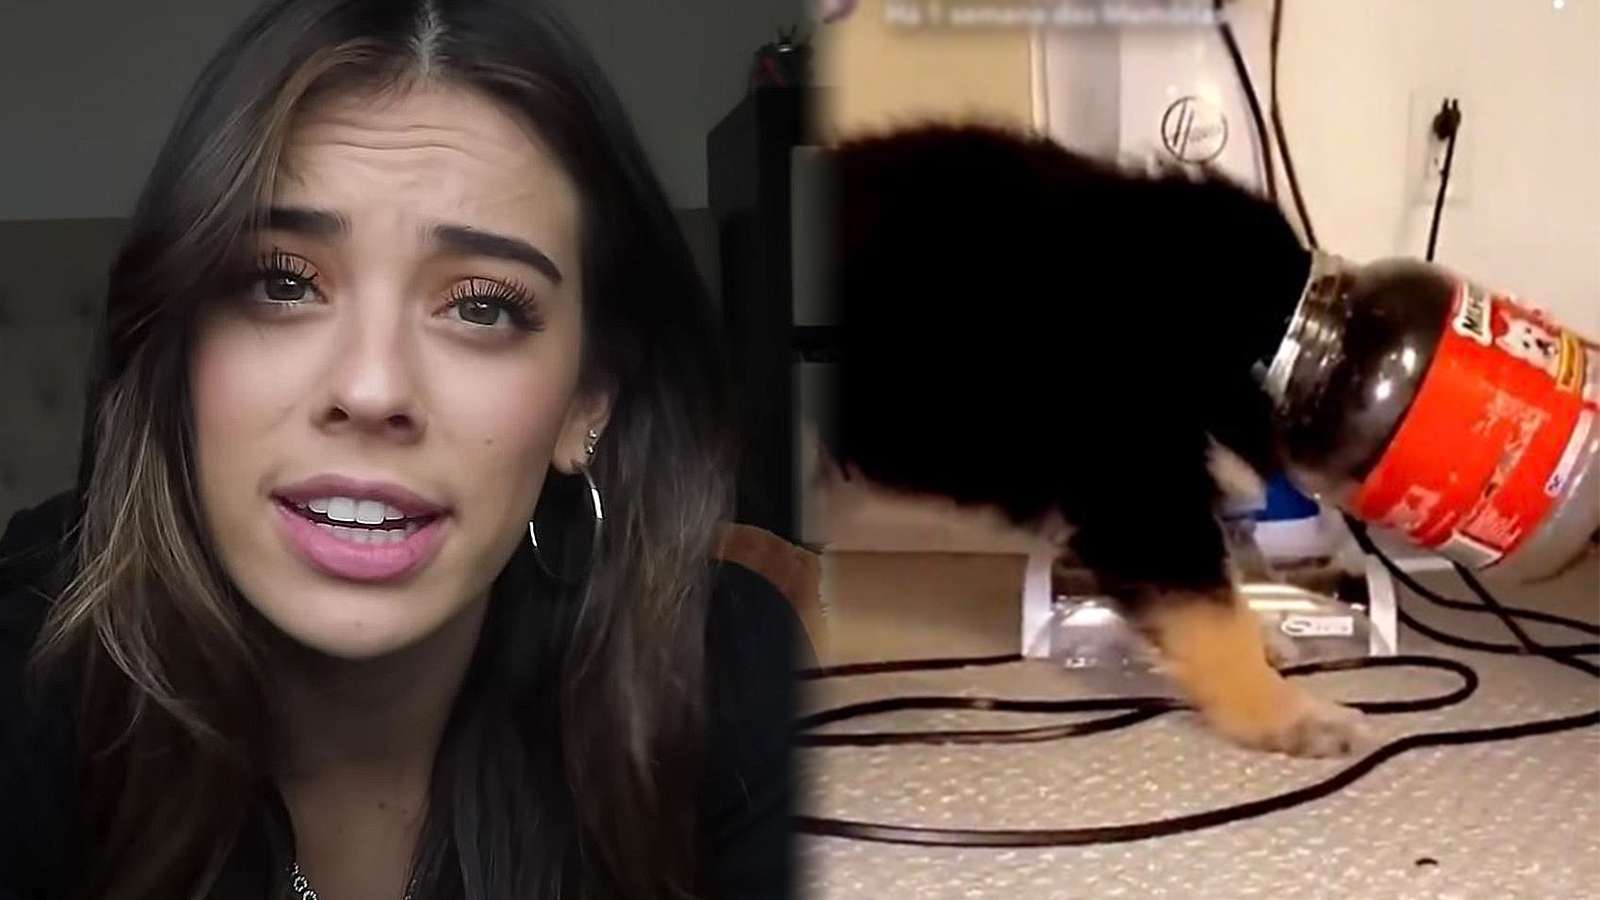 Lauren Kettering apologizes for dog video